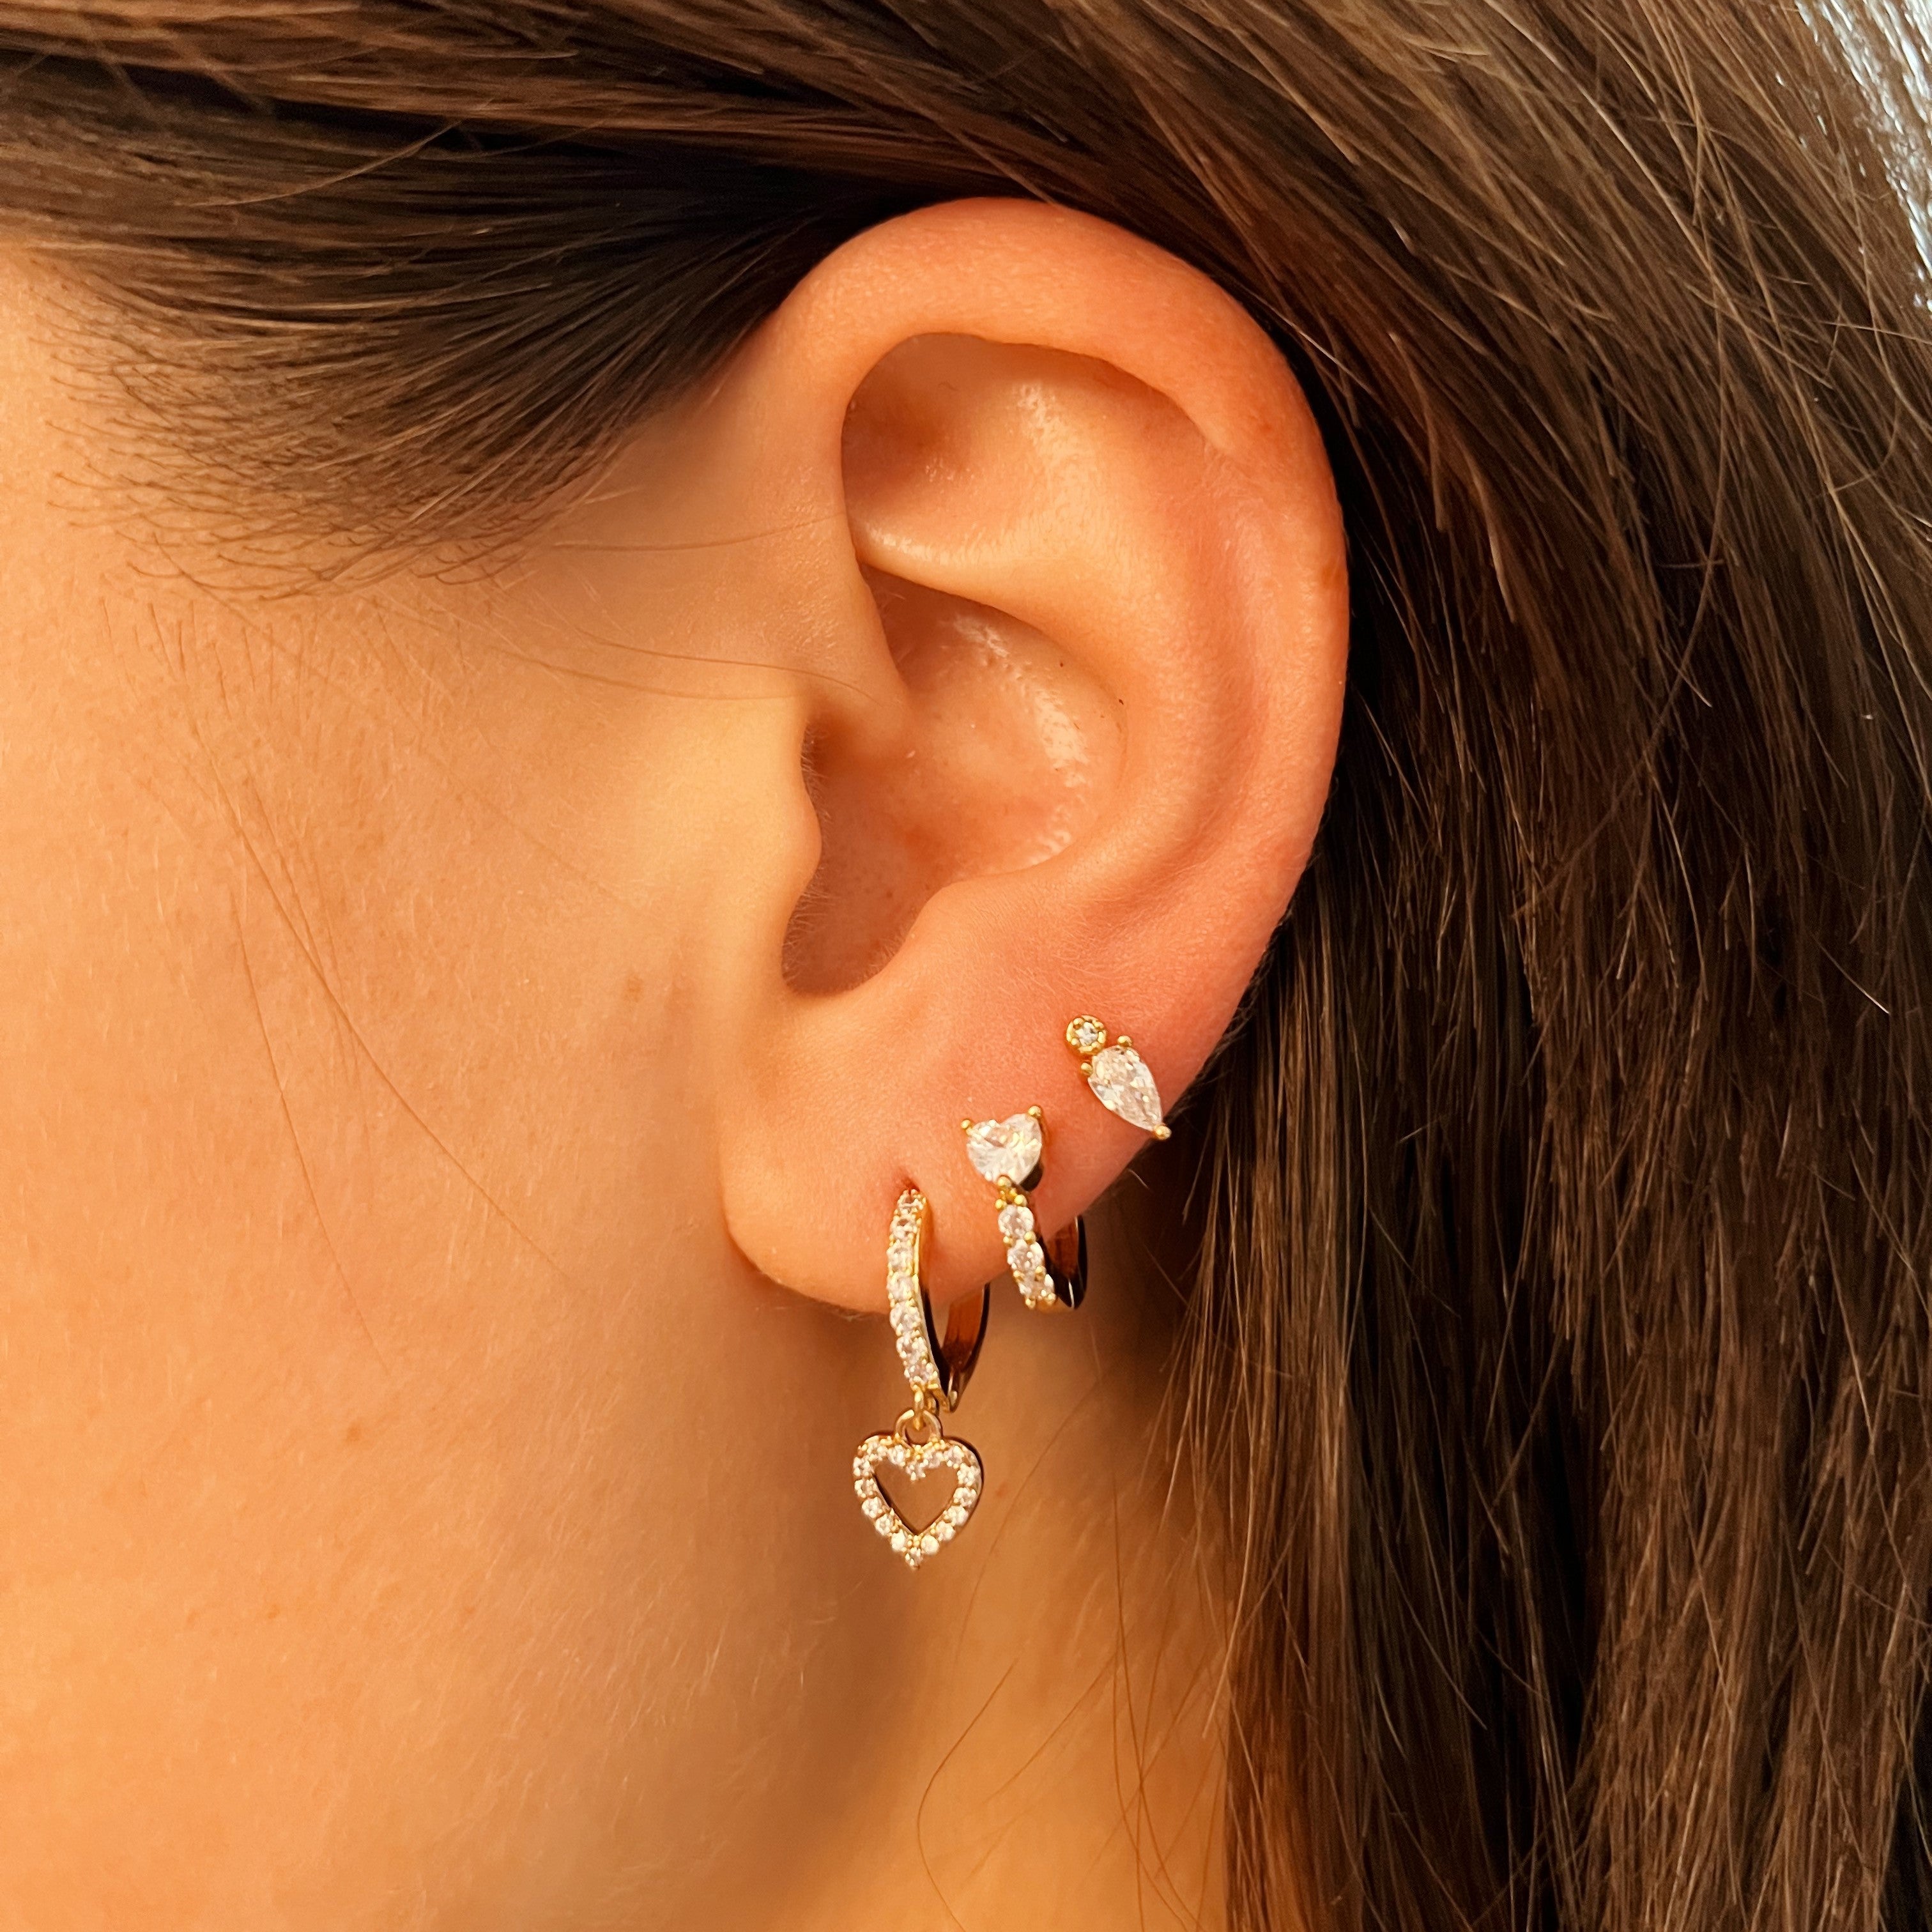 Earrings diamond heart white